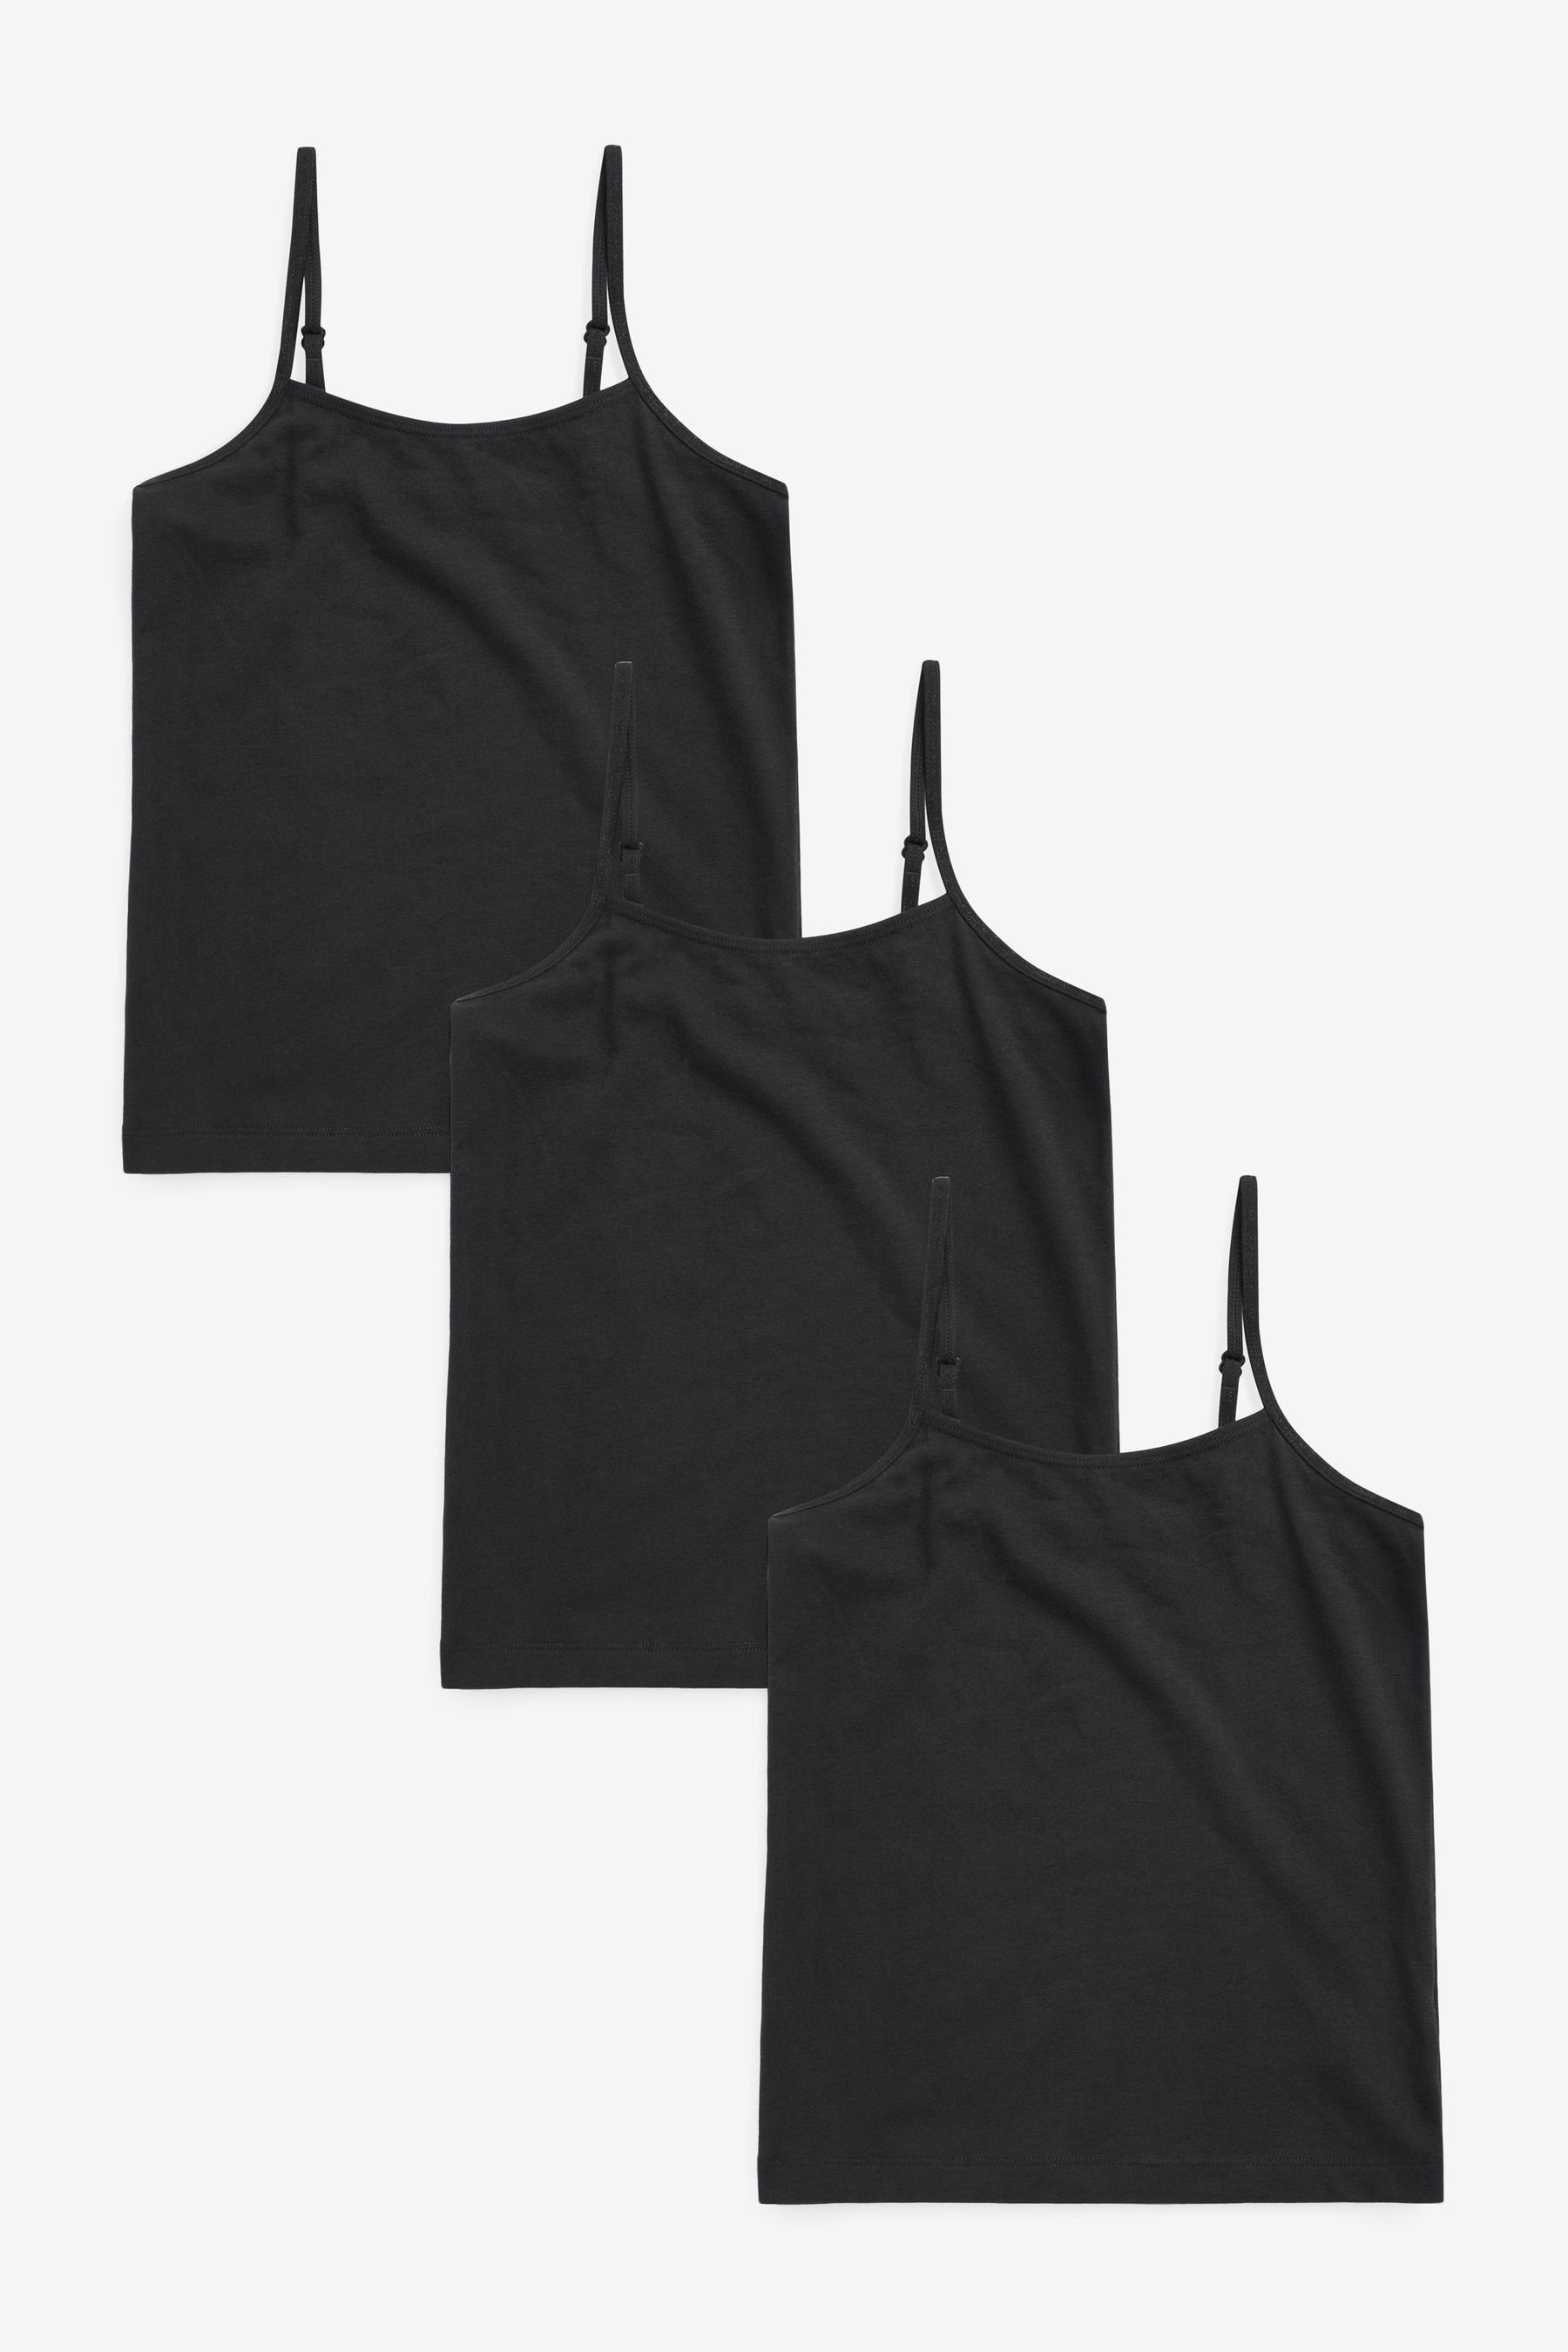 Next Unterhemd Trägertops mit Spaghettiträgern im 3er-Pack (3-St) Black